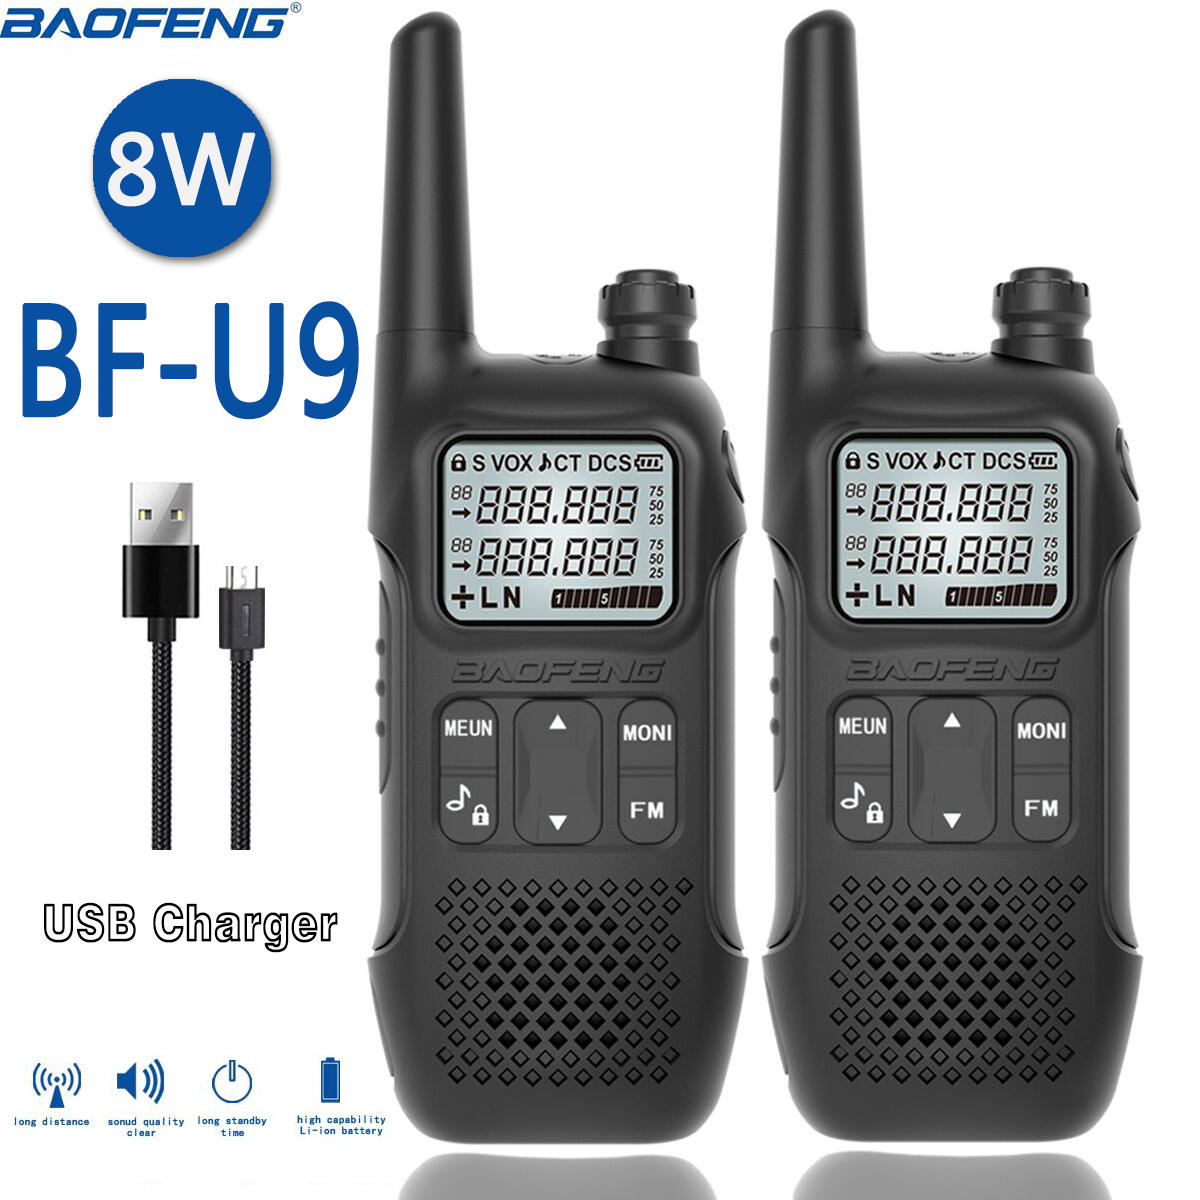 

2PCS BAOFENG BF-U9 8W Portable Mini Walkie Talkie Handheld Hotel Civilian Radio Comunicacion Ham HF Transceiver US Plug